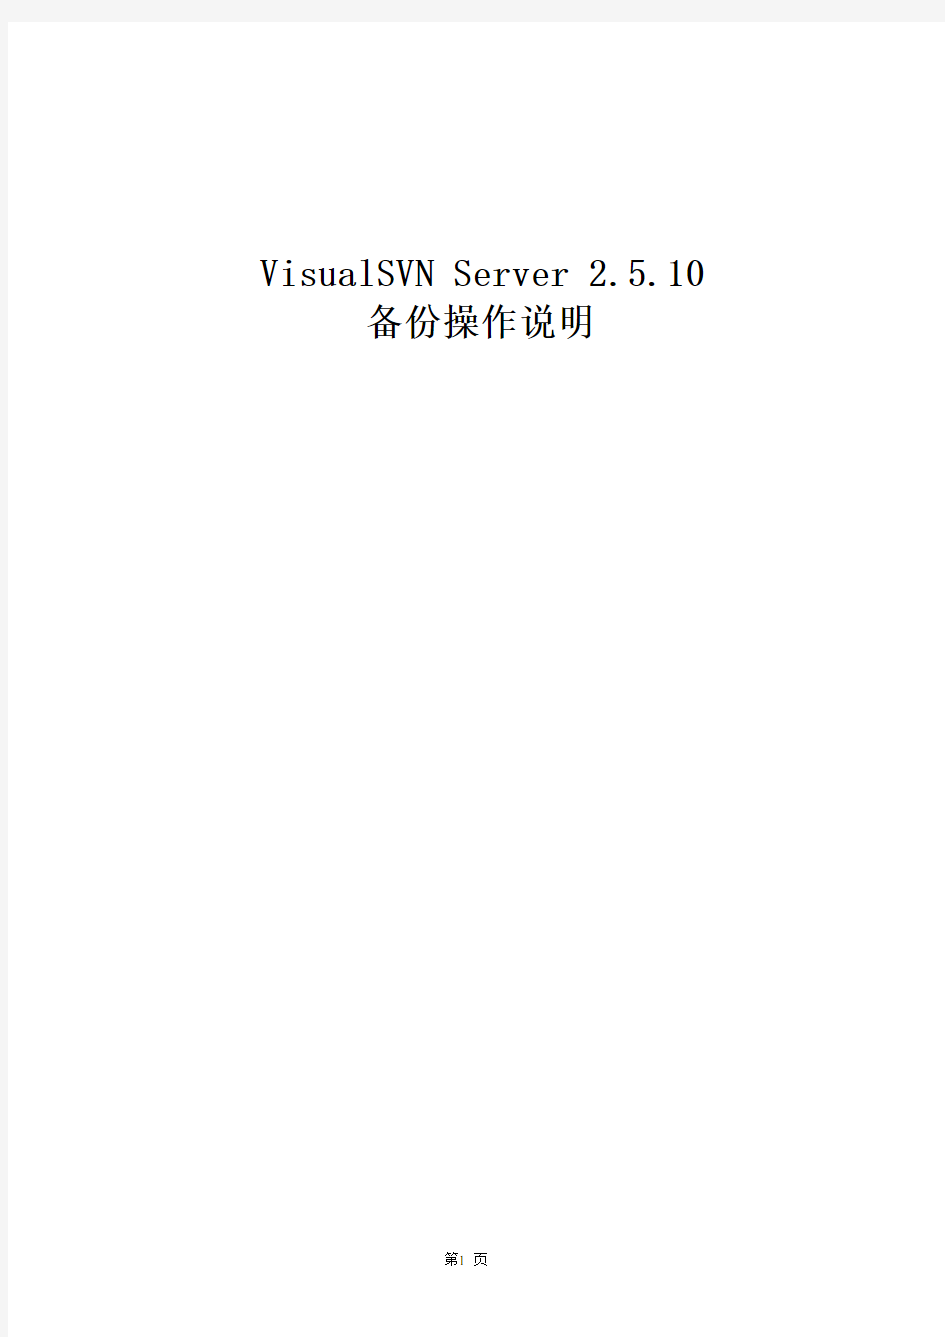 VisualSVN Server备份操作说明